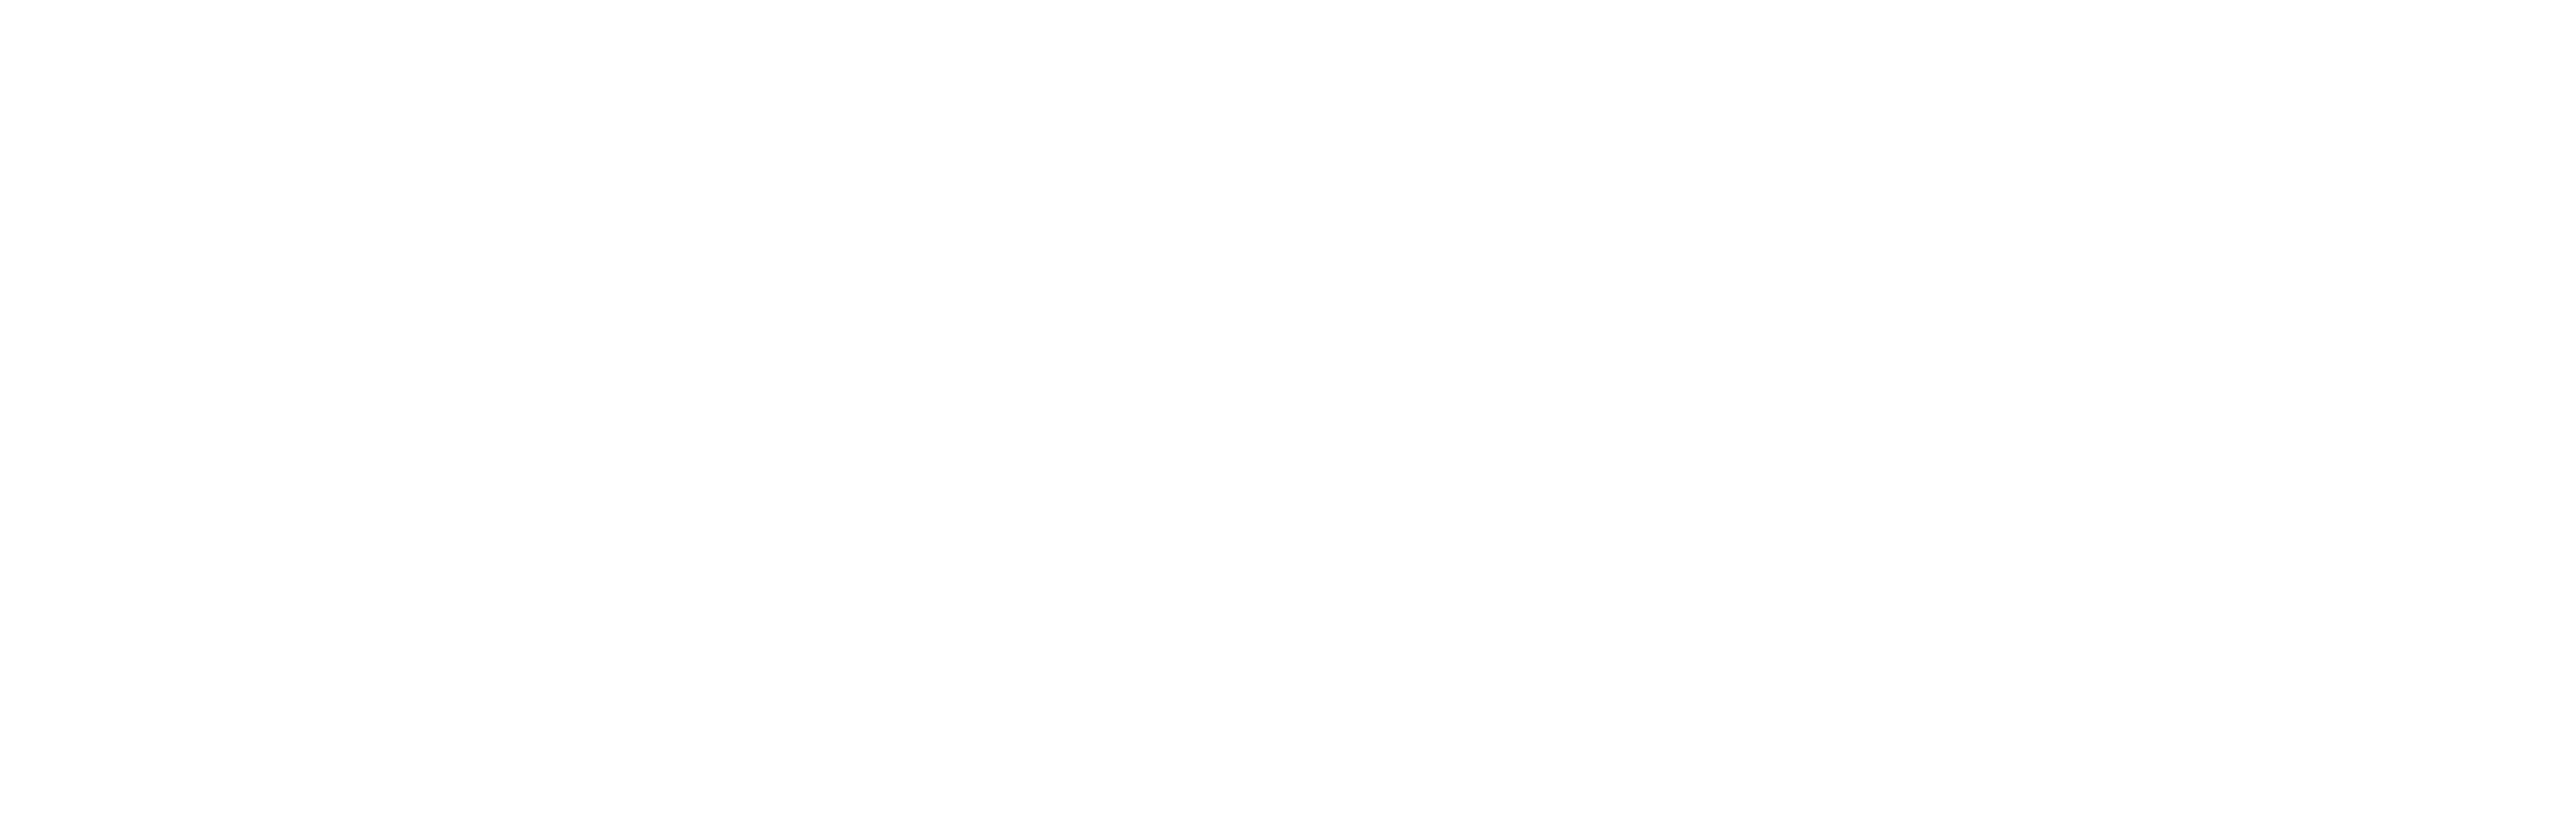 Foundry logos-comox valley_white